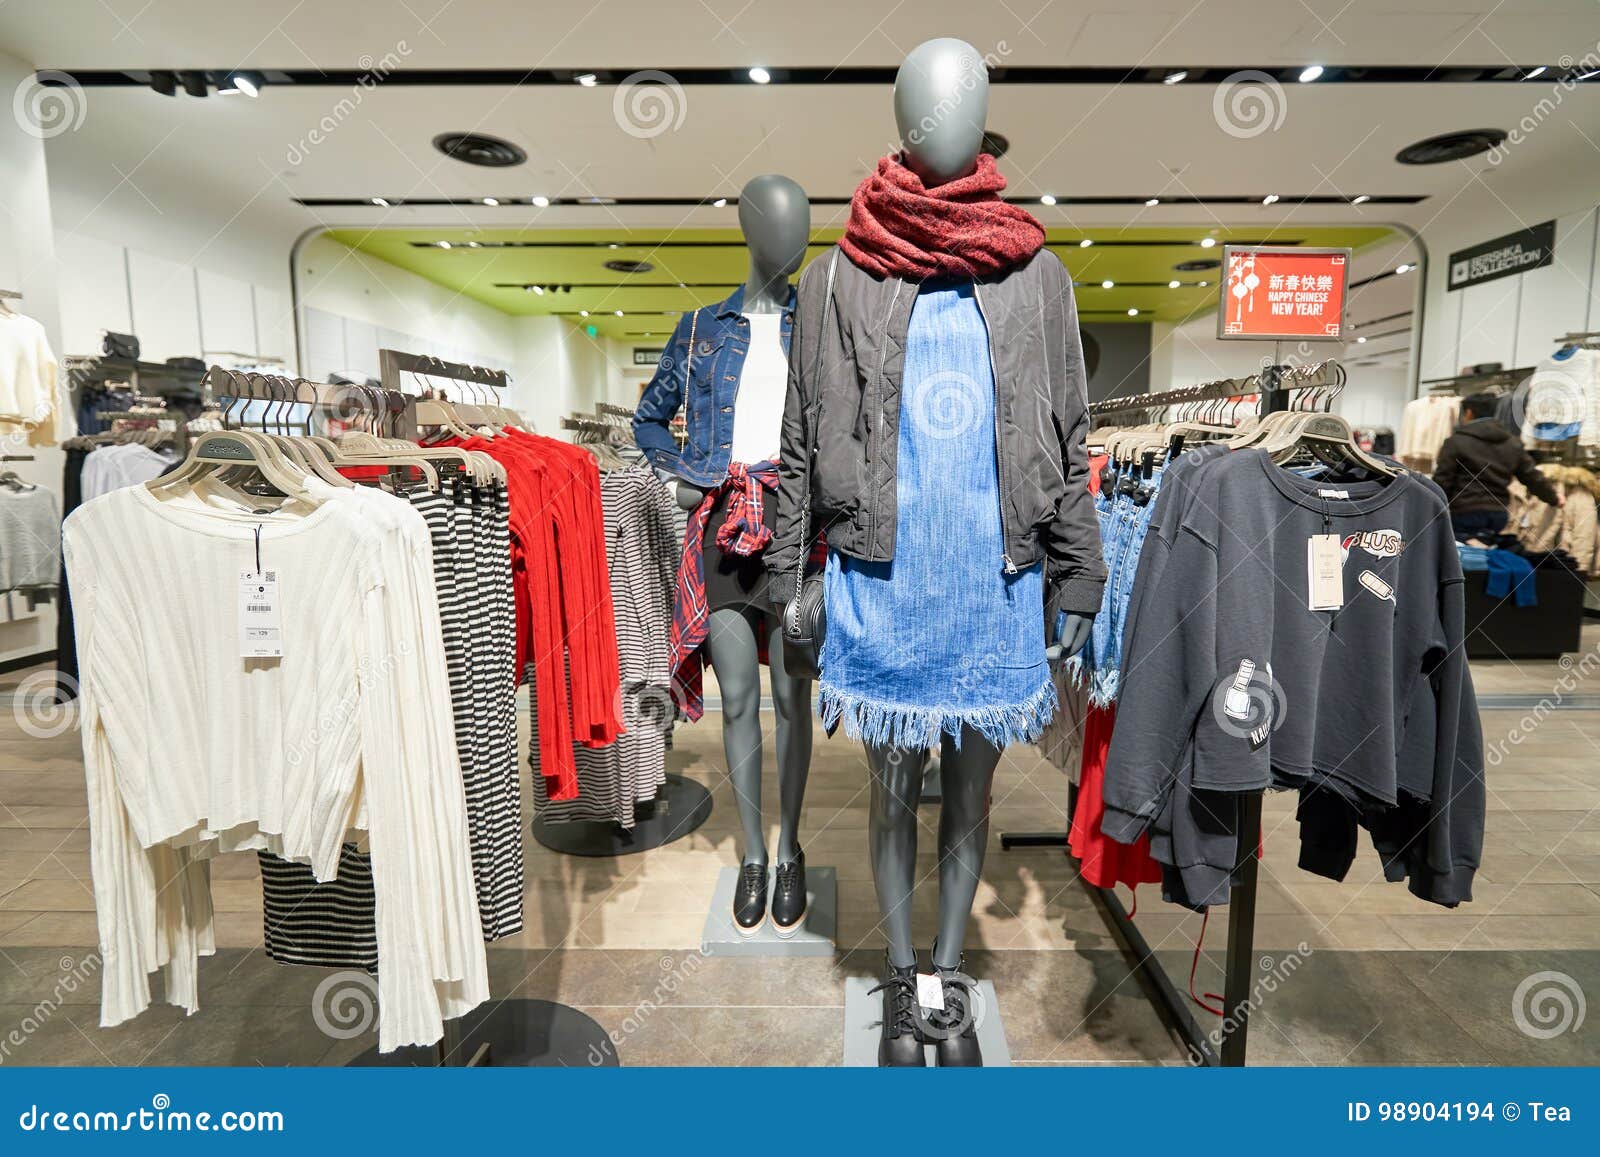 Bershka editorial stock image. Image of sell, mall, indoor - 98904194